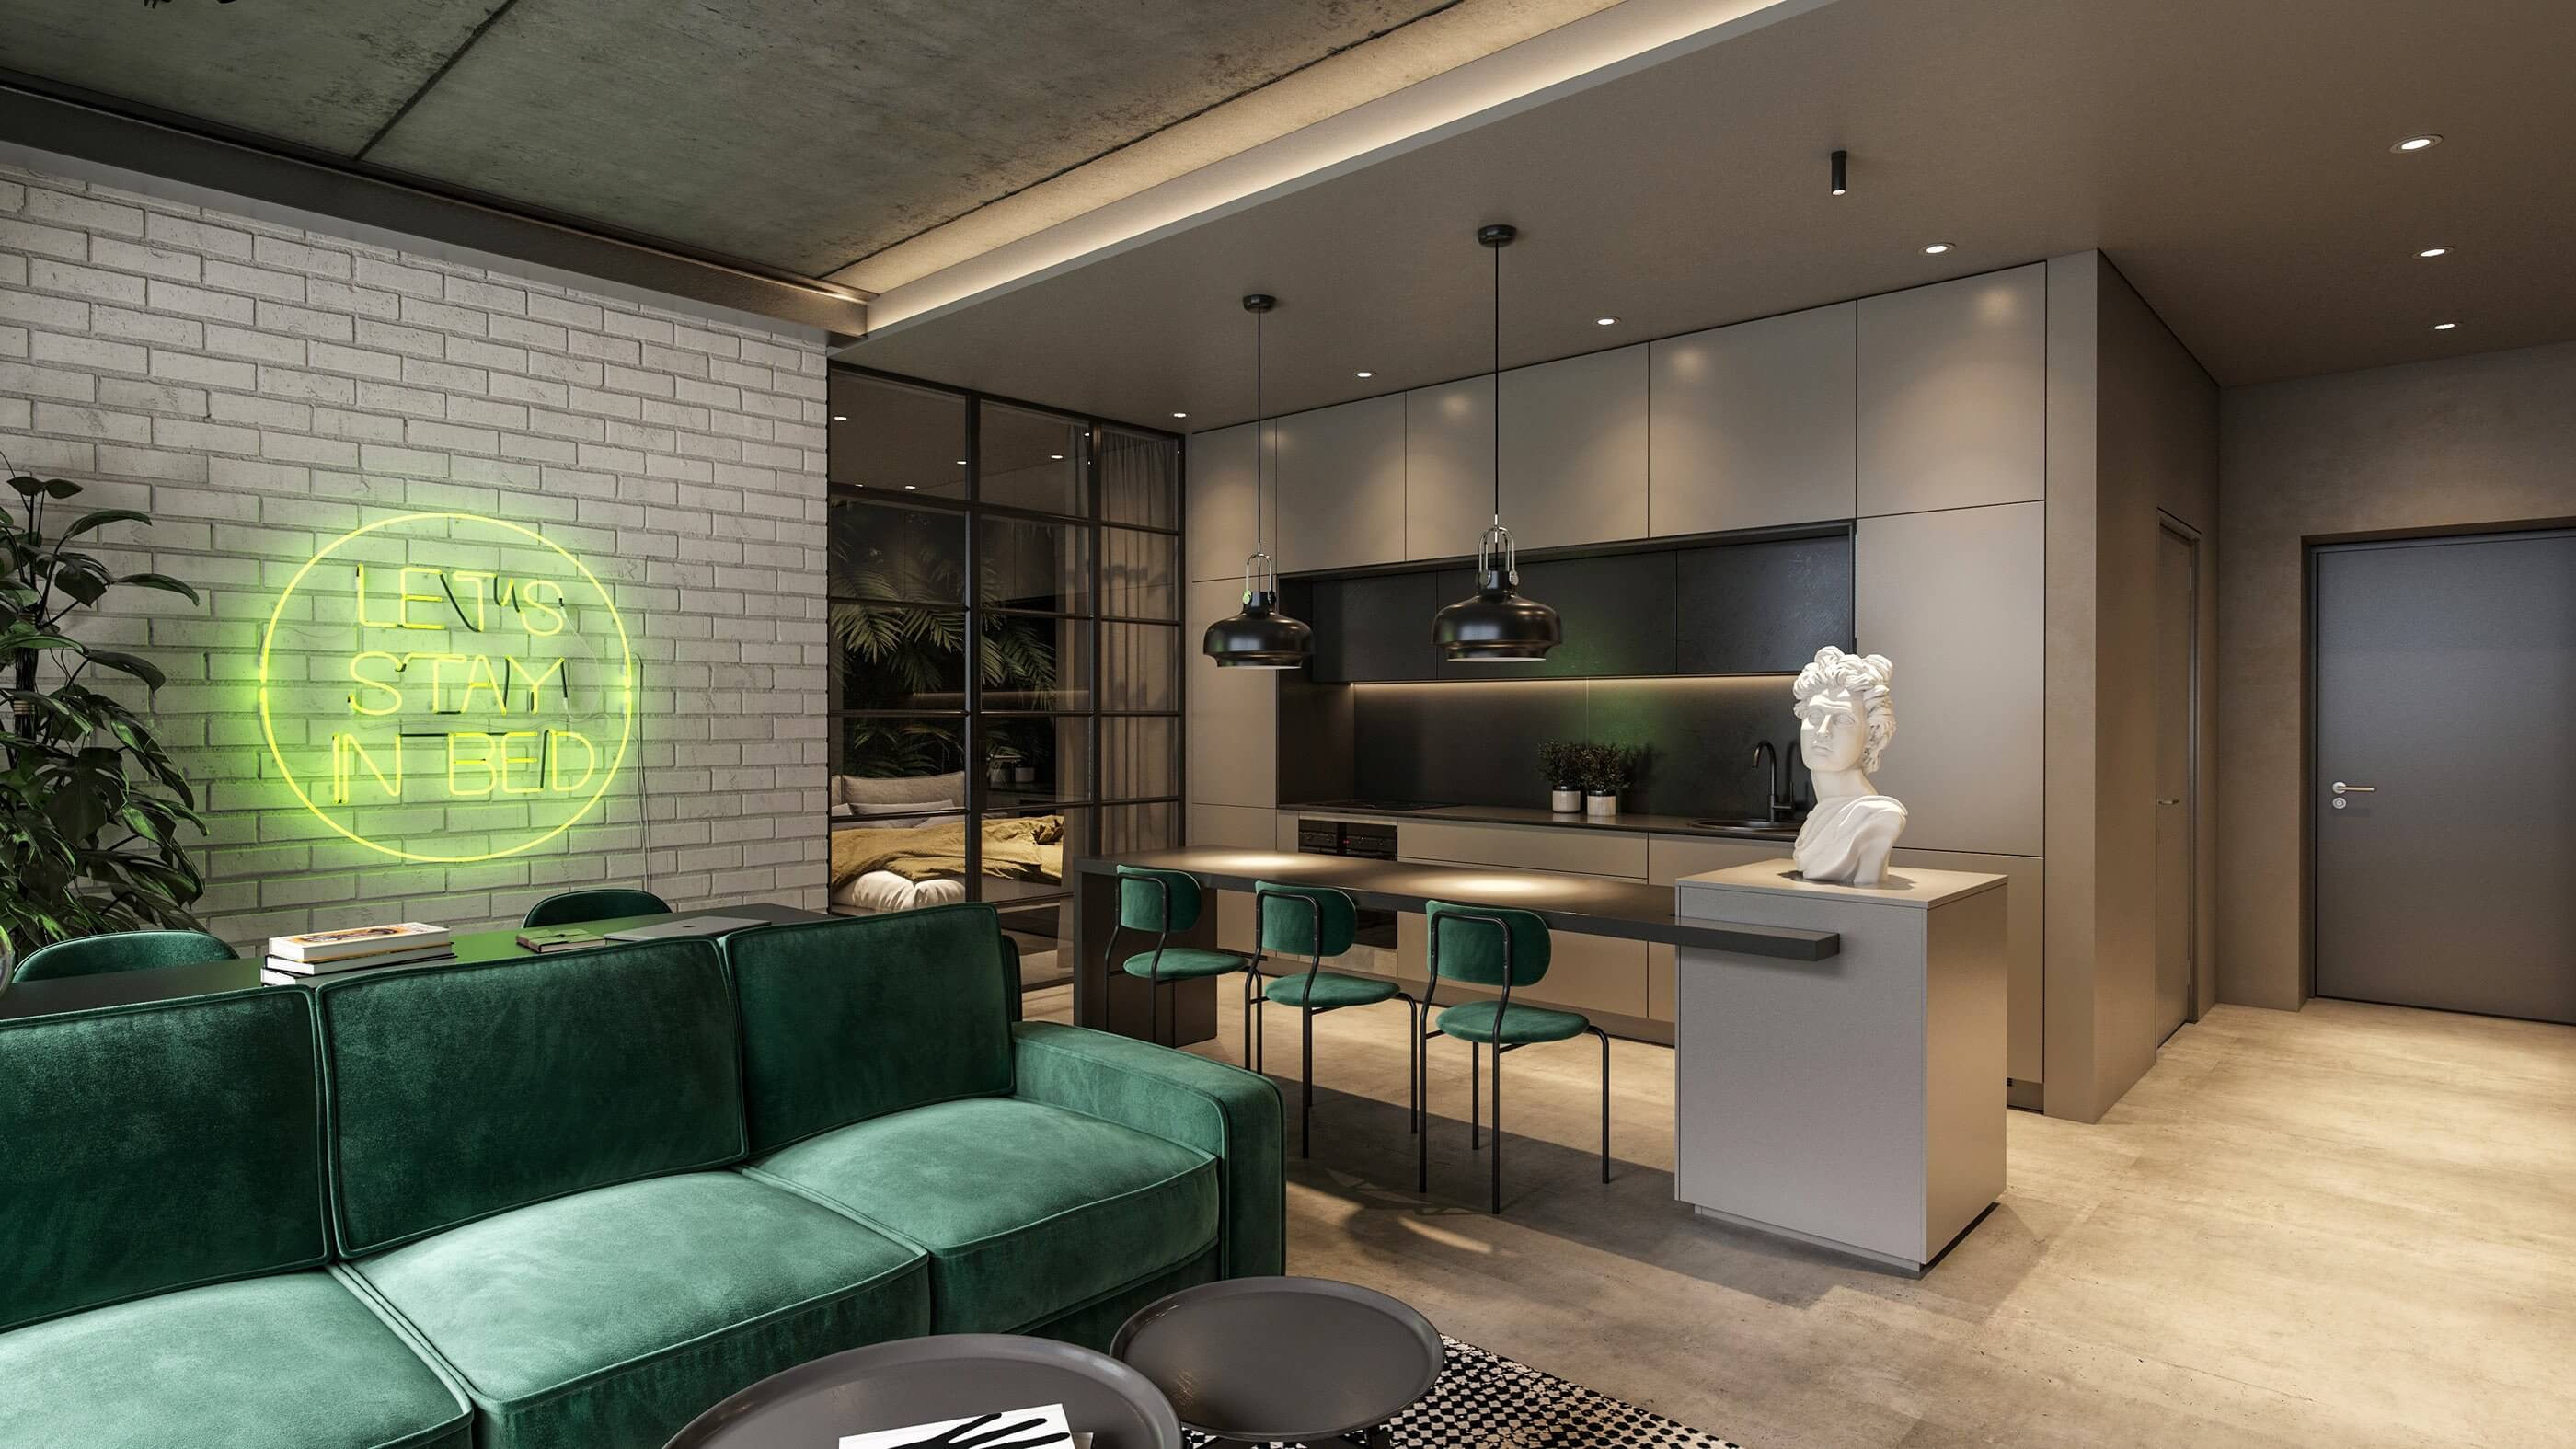 Jungle paradise apartment living room kitchen design block - cgi visualization